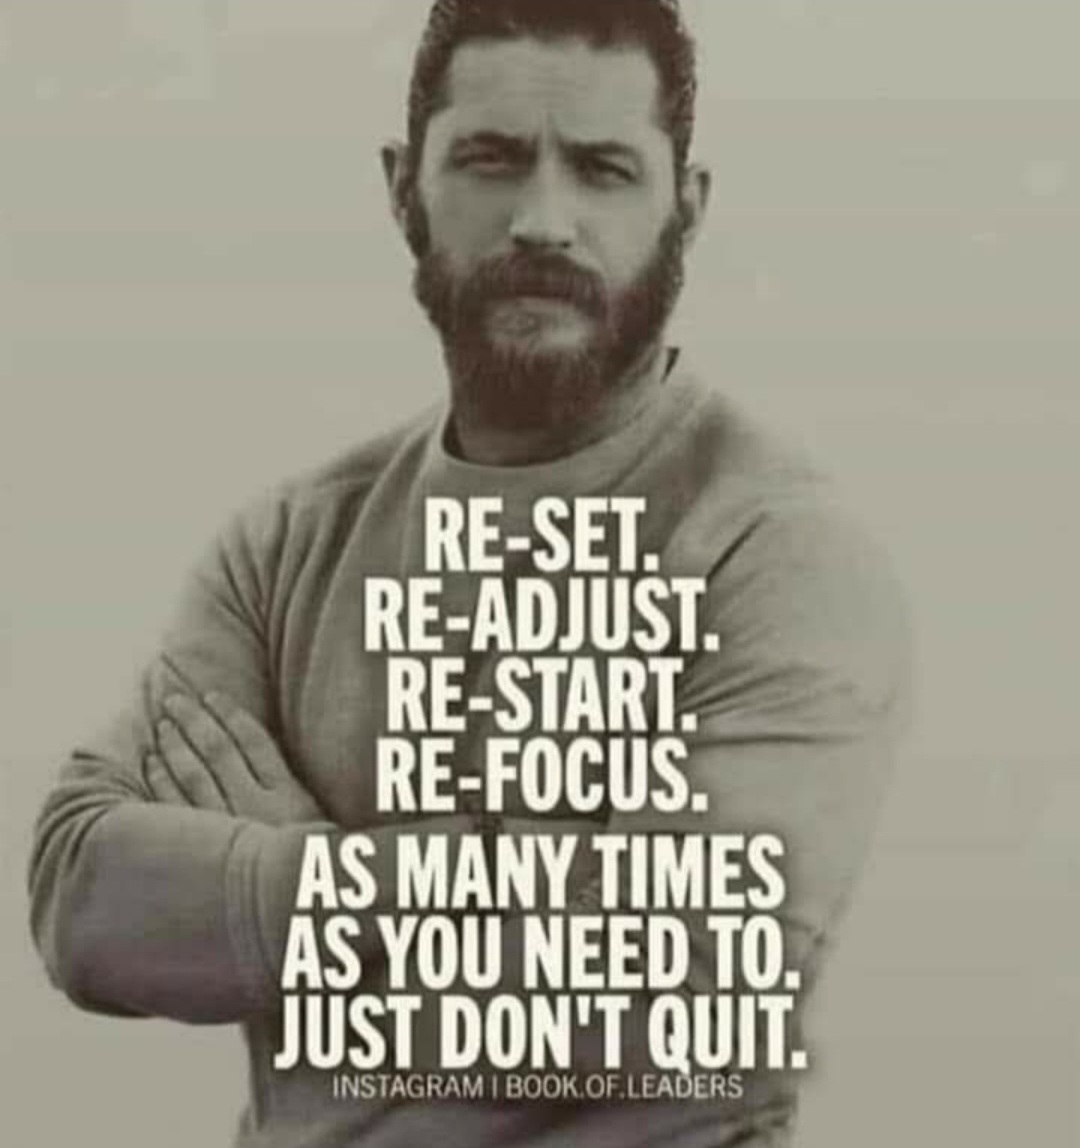 You've got this....
#reset #readjust #restart #refocus #justdontquit #fibromyalgia #cfs #fibromyalgiasupportbymonica